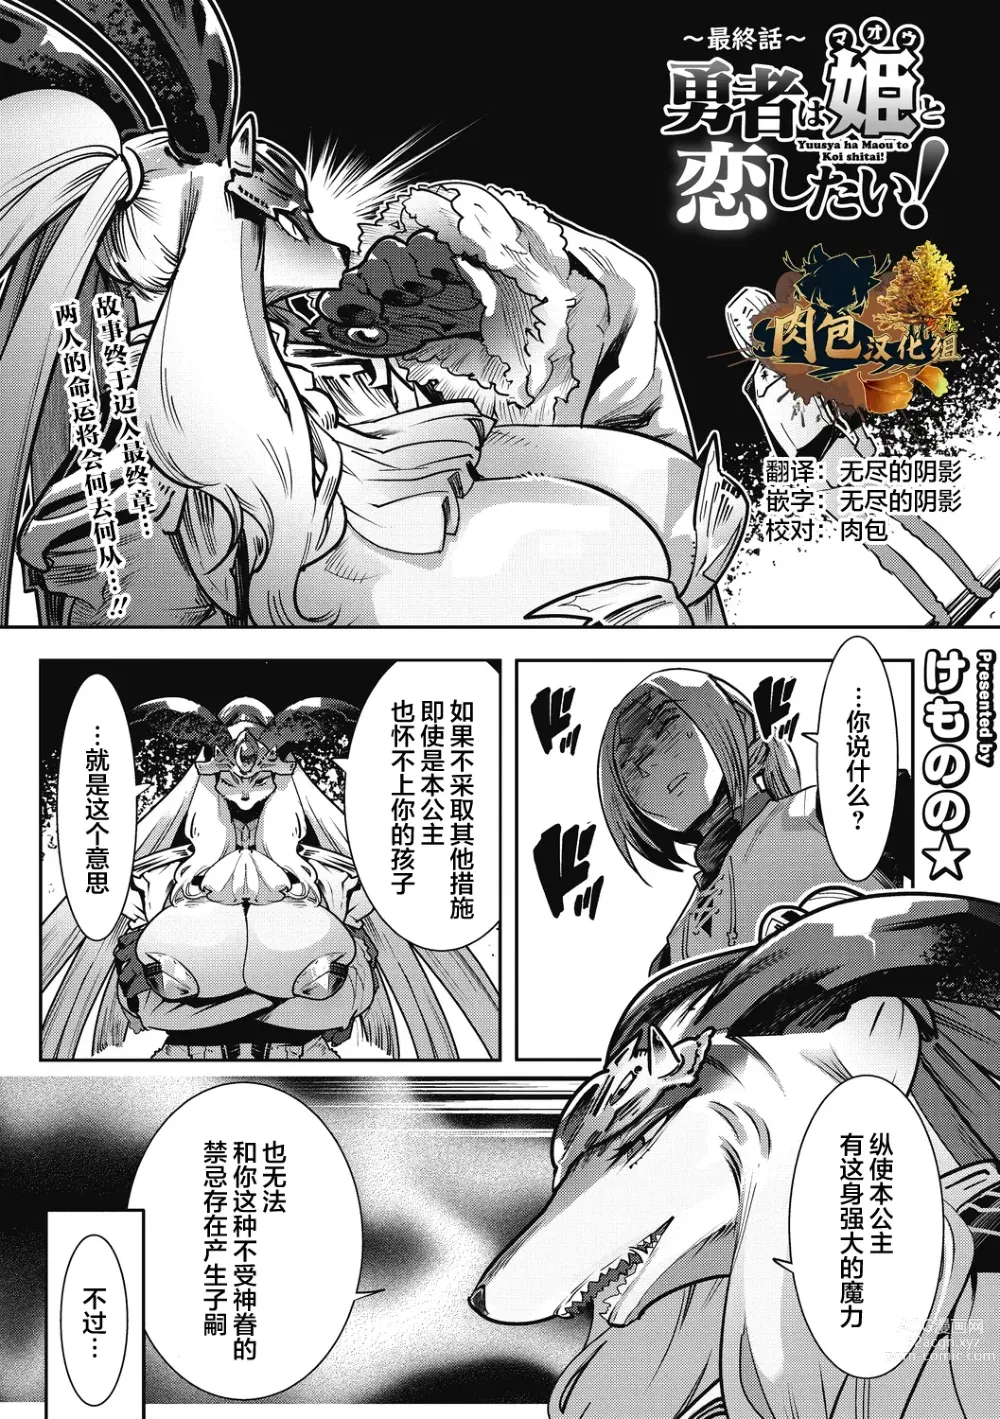 Page 1 of manga Yuusha ha Maou to Koi shitai Saishuuwa